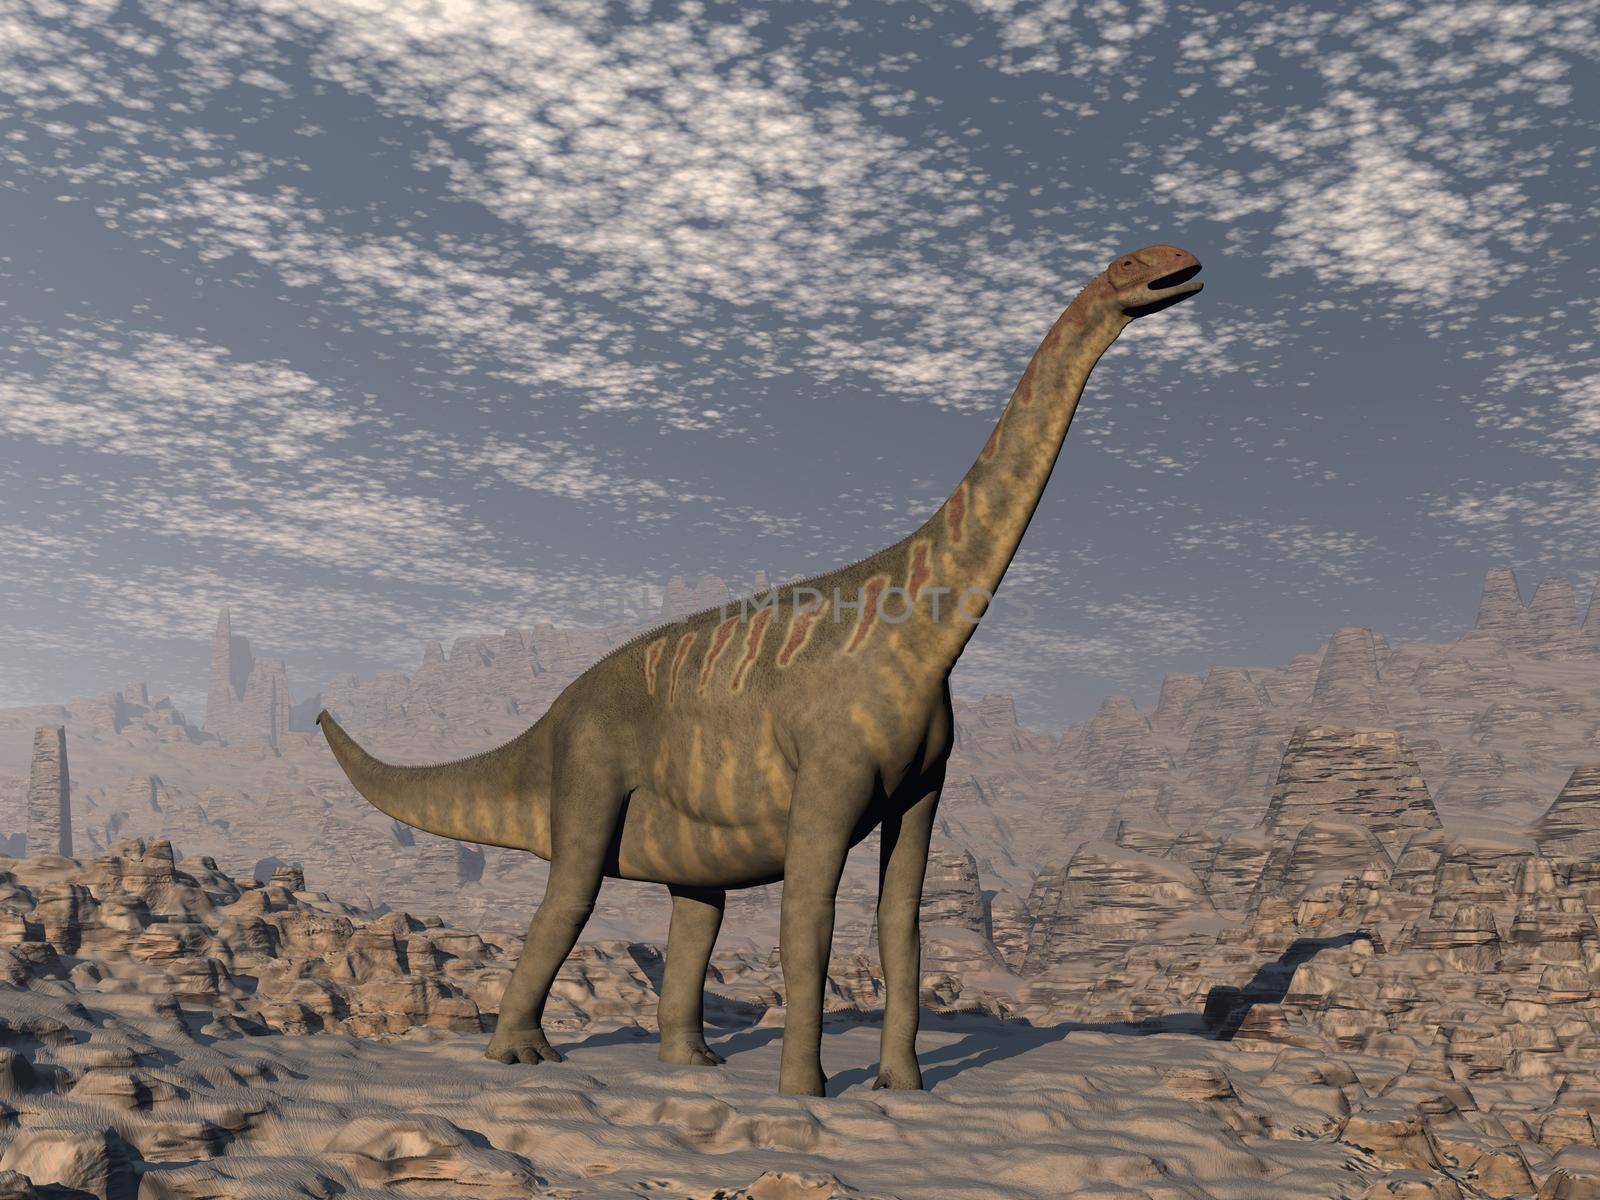 Jobaria dinosaur in the desert - 3D render by Elenaphotos21